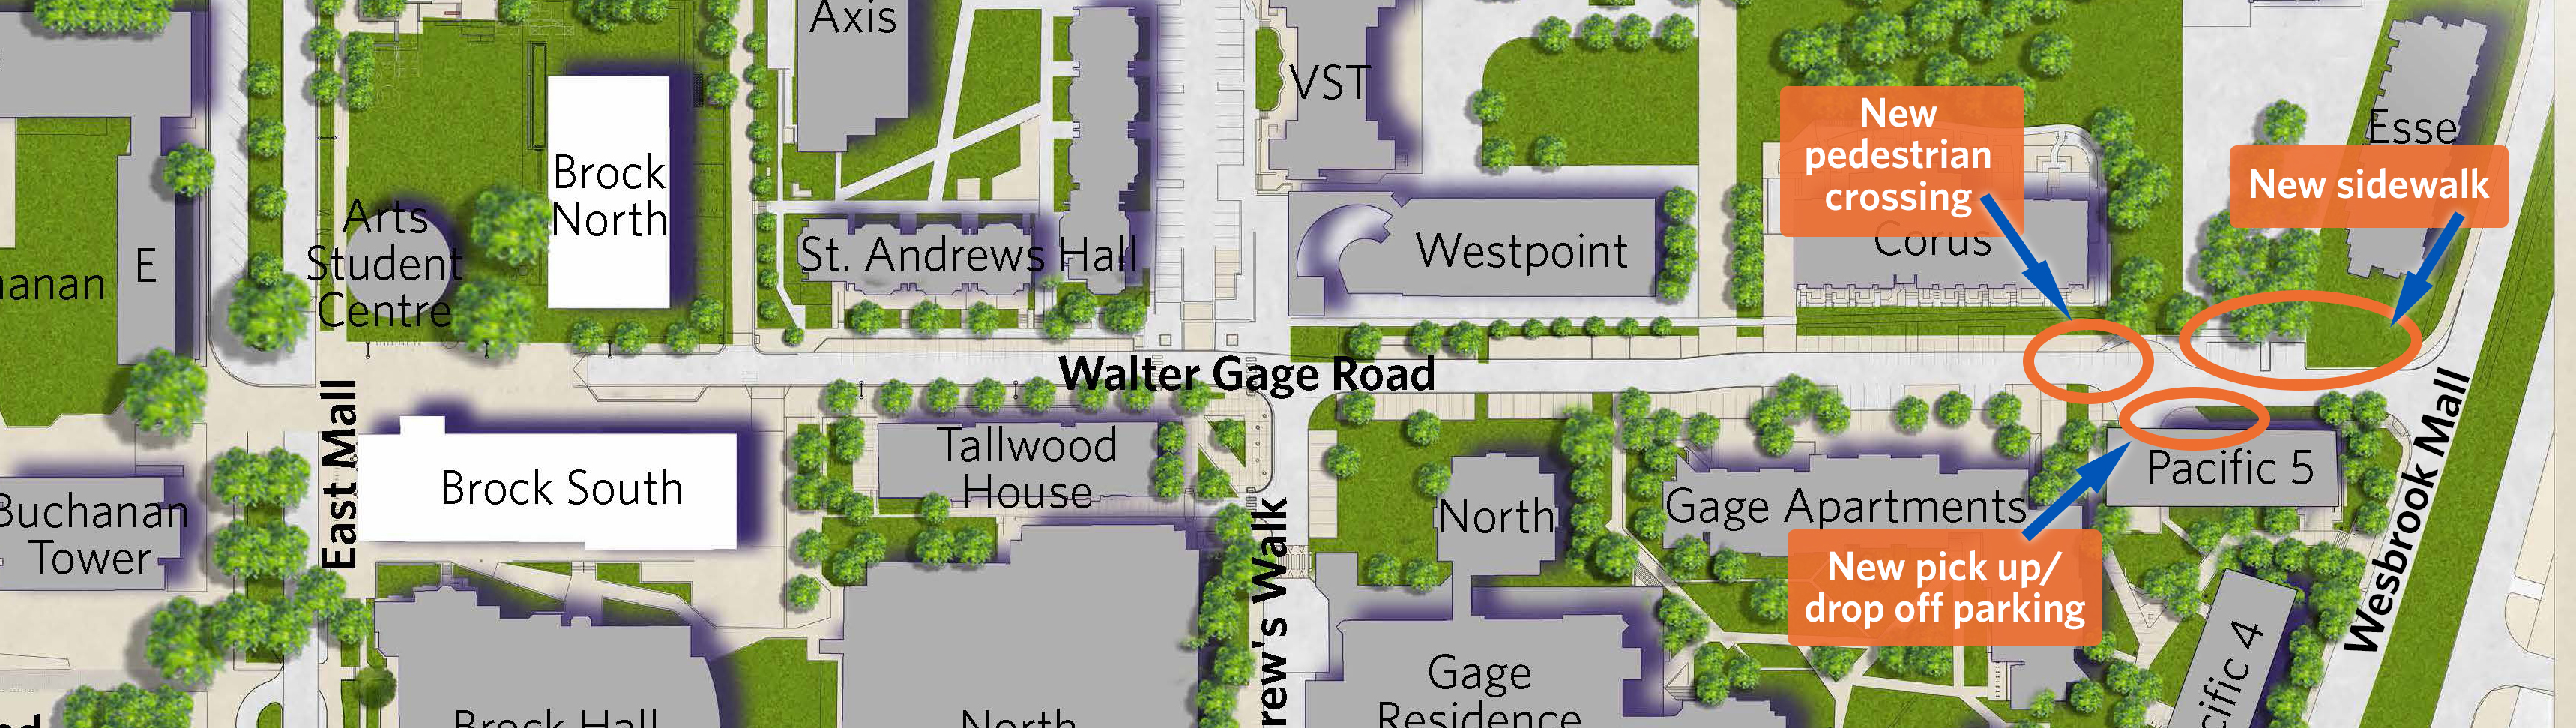 Walter Gage Road upgrades